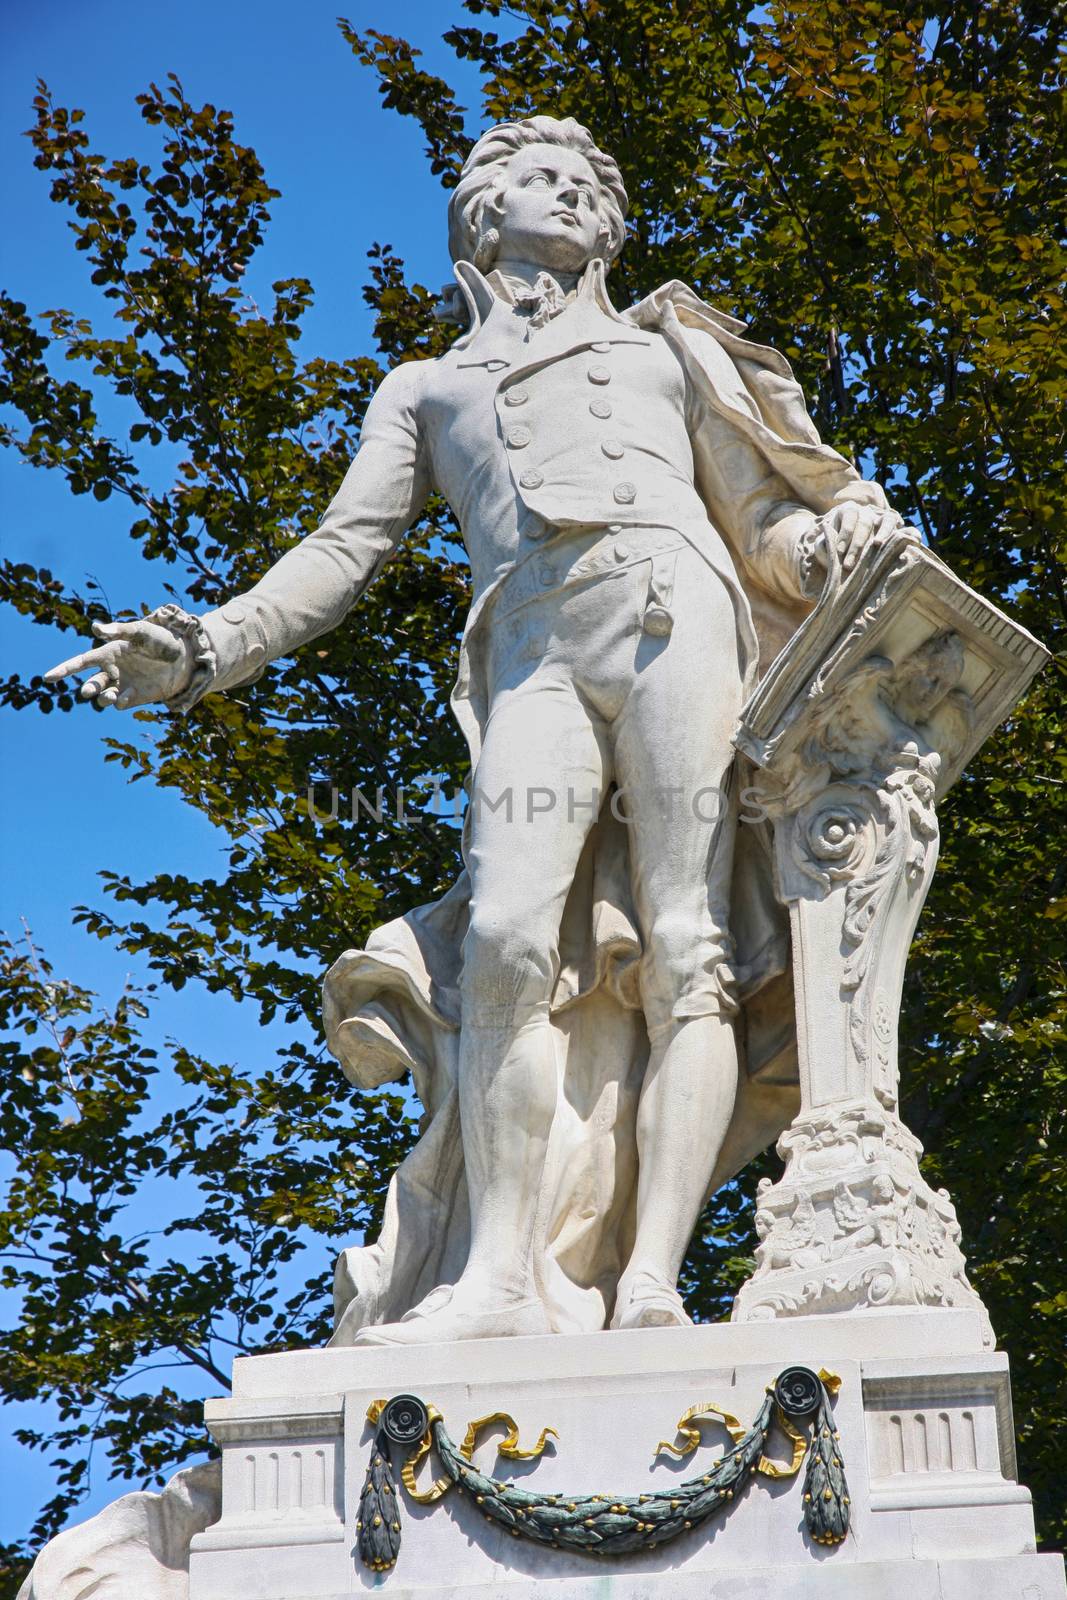 Statue of Wolfgang Amadeus Mozart in Vienna by vladacanon